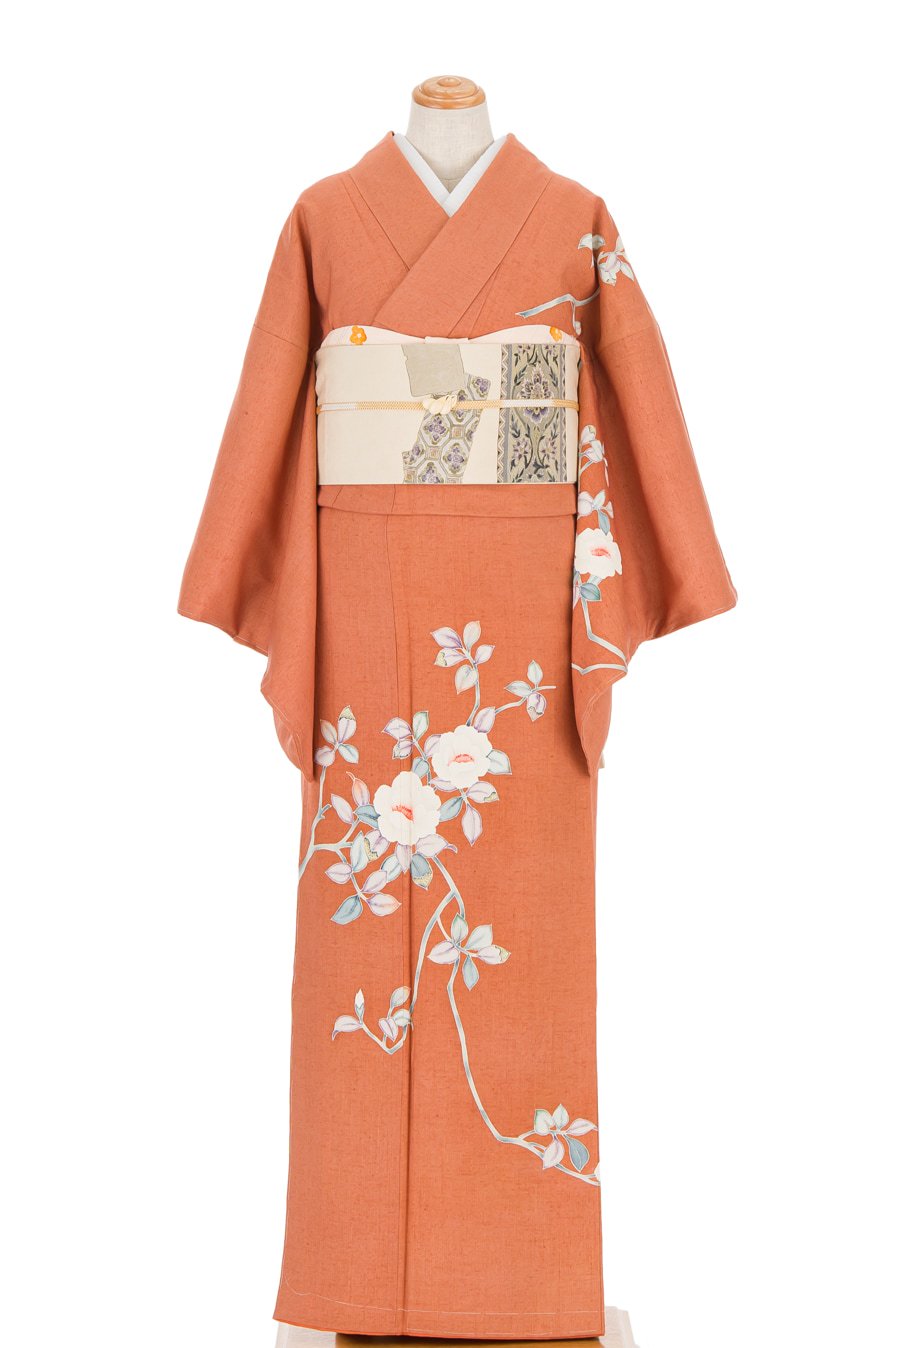 kimonolove紋錦紗 長襦袢 正絹 梅に椿 着物 antique kimono A-1333